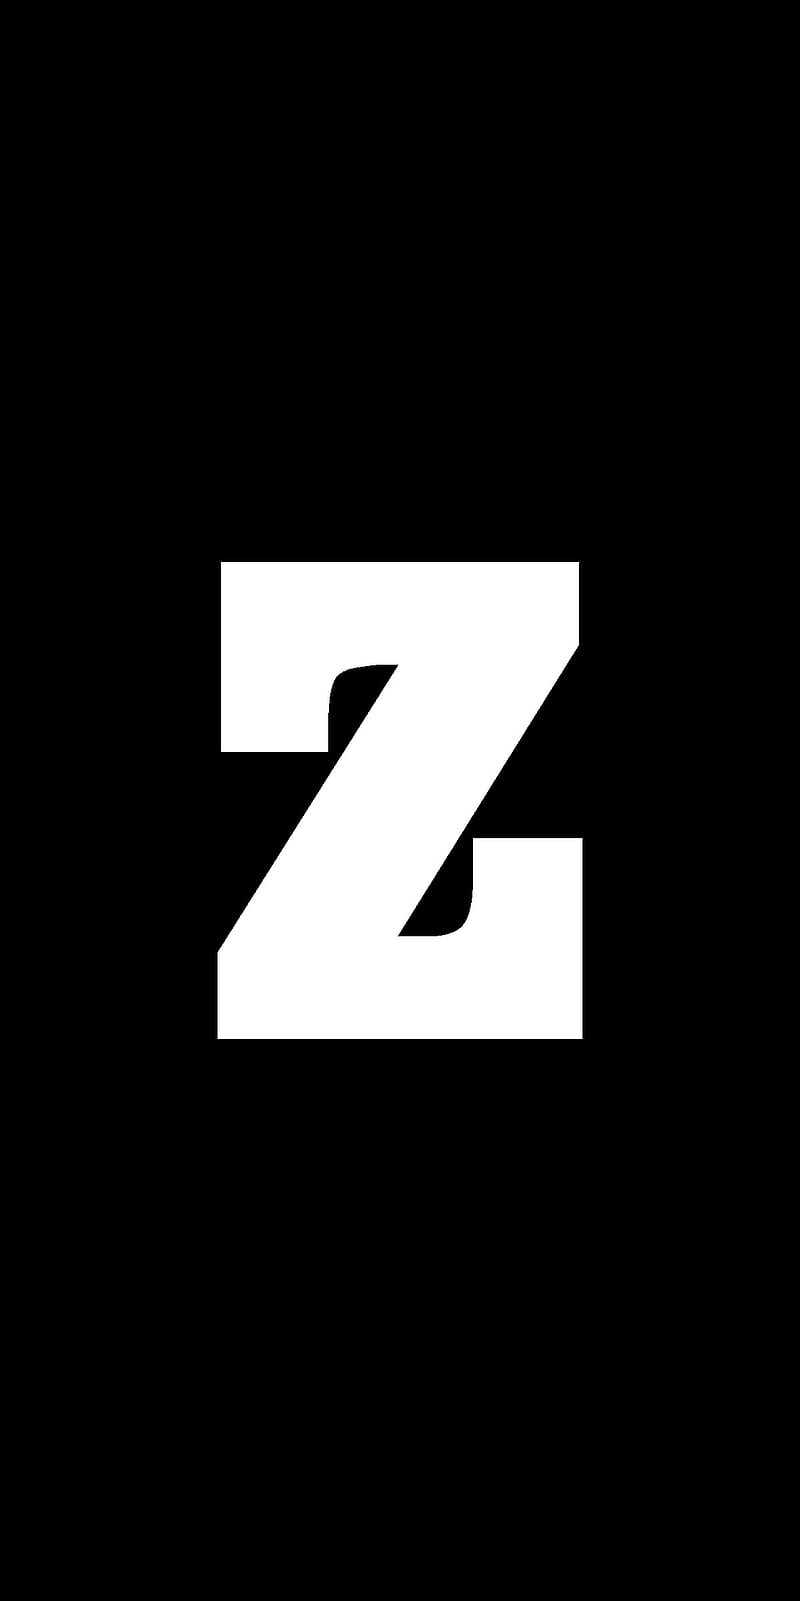 ZS Letter logo icon design template elements - stock vector 2679150 |  Crushpixel